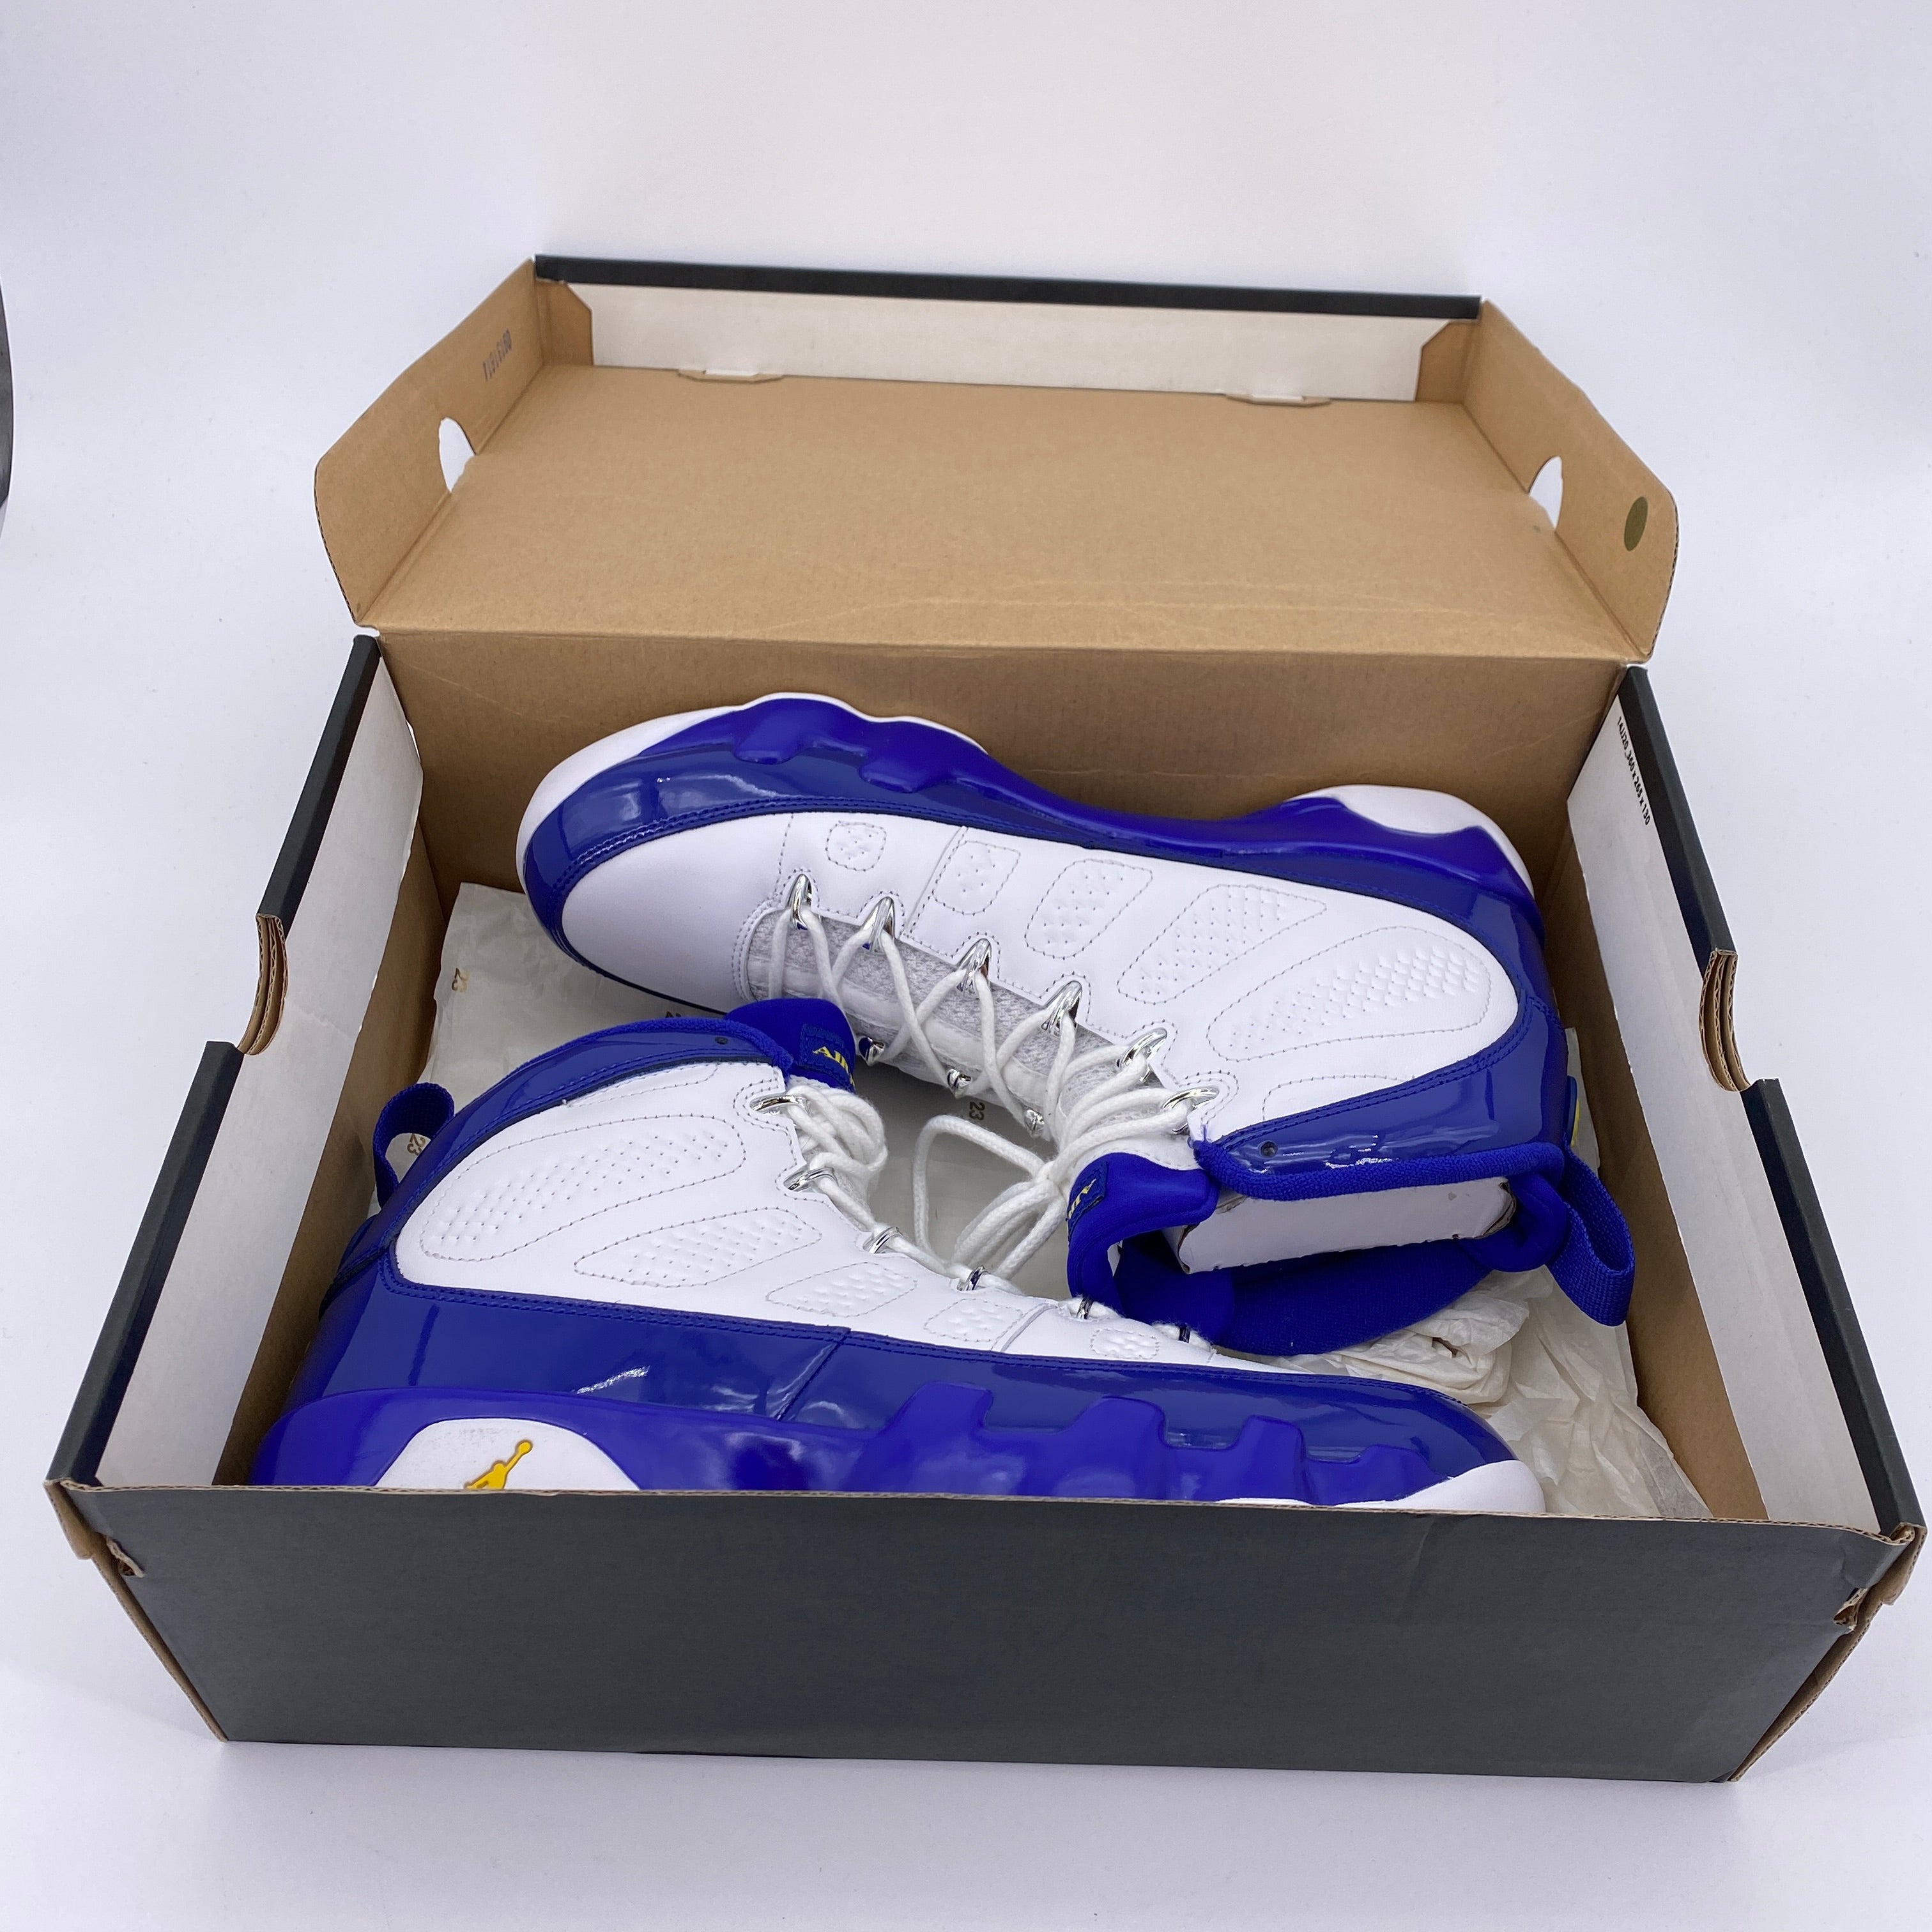 Air Jordan 9 Retro &quot;Kobe Bryant Pe&quot; 2016 New Size 11